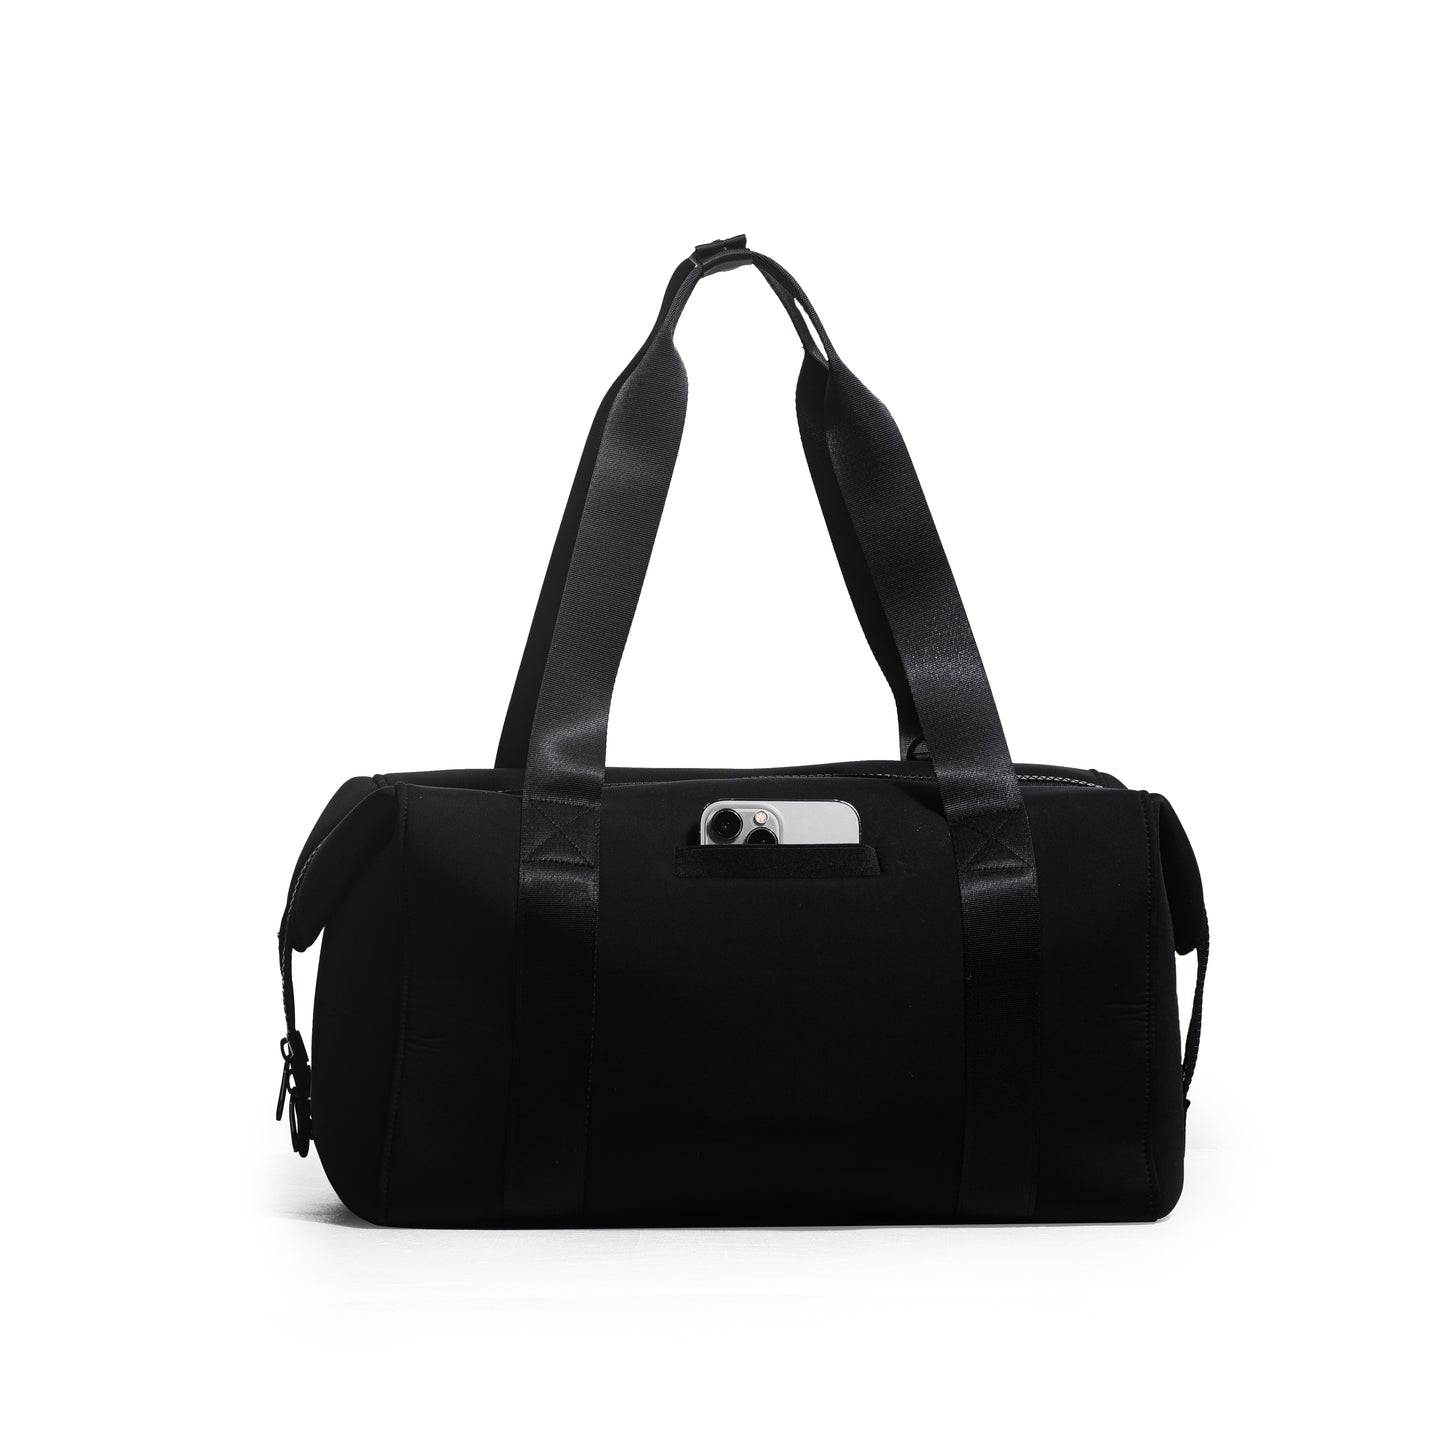 Neo Travel Bag